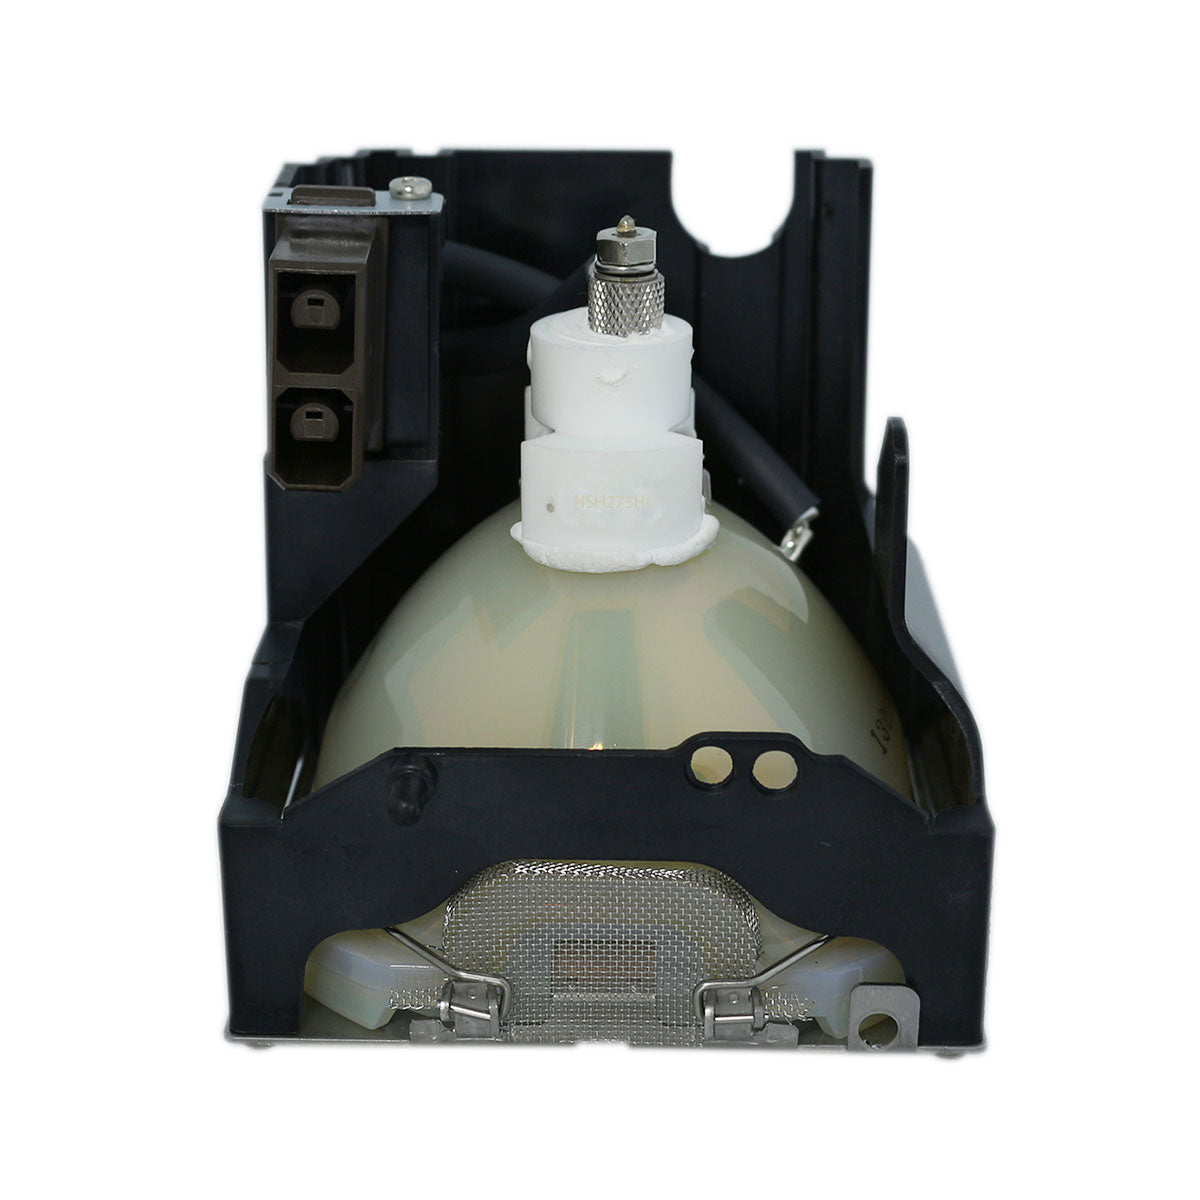 ASK Proxima LAMP-030 Ushio Projector Lamp Module